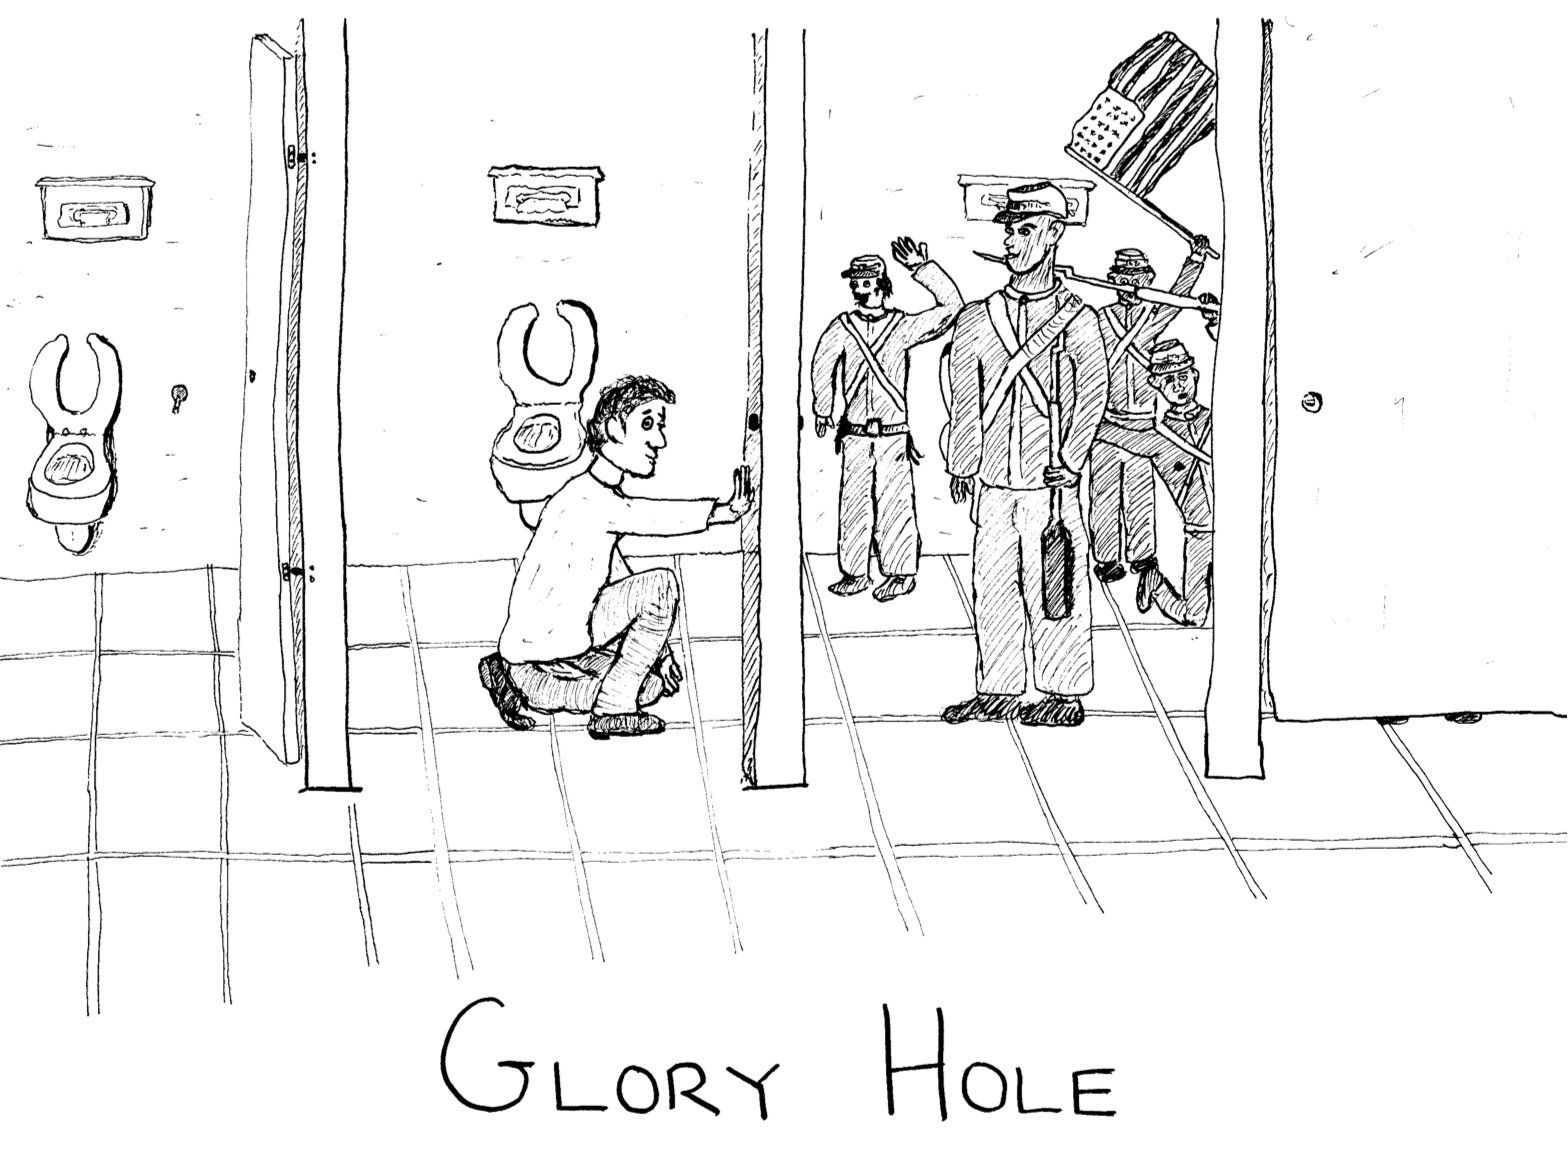 History of the gloryhole